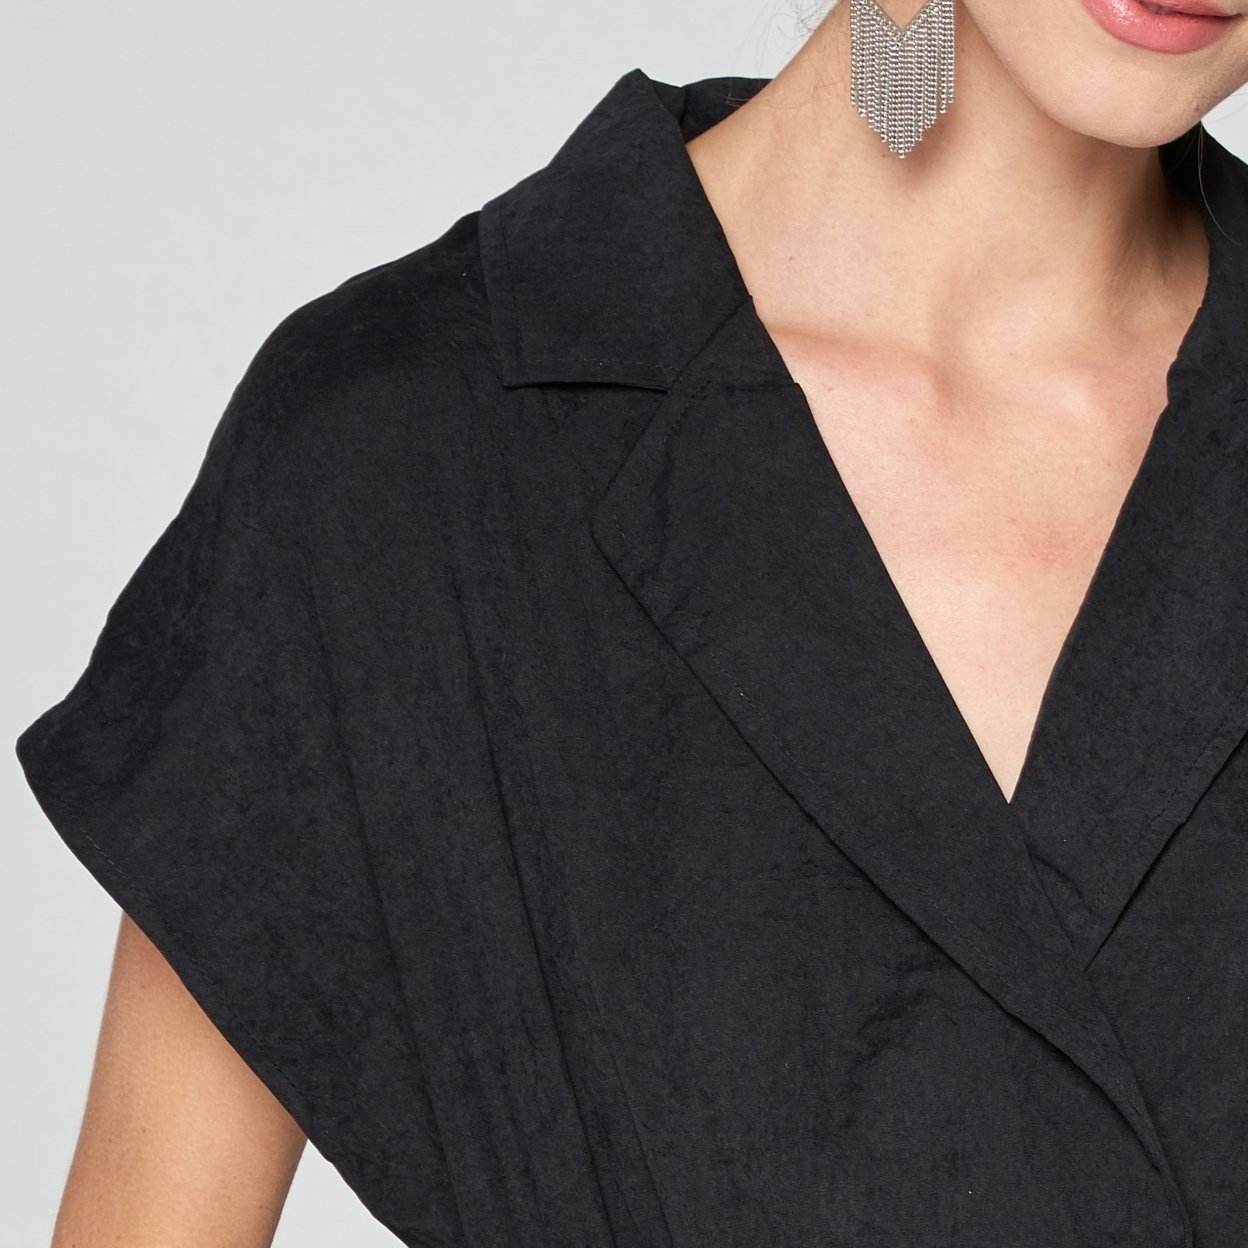 Kimono Cap Sleeve Jumpsuit - Black, Small (2-6)